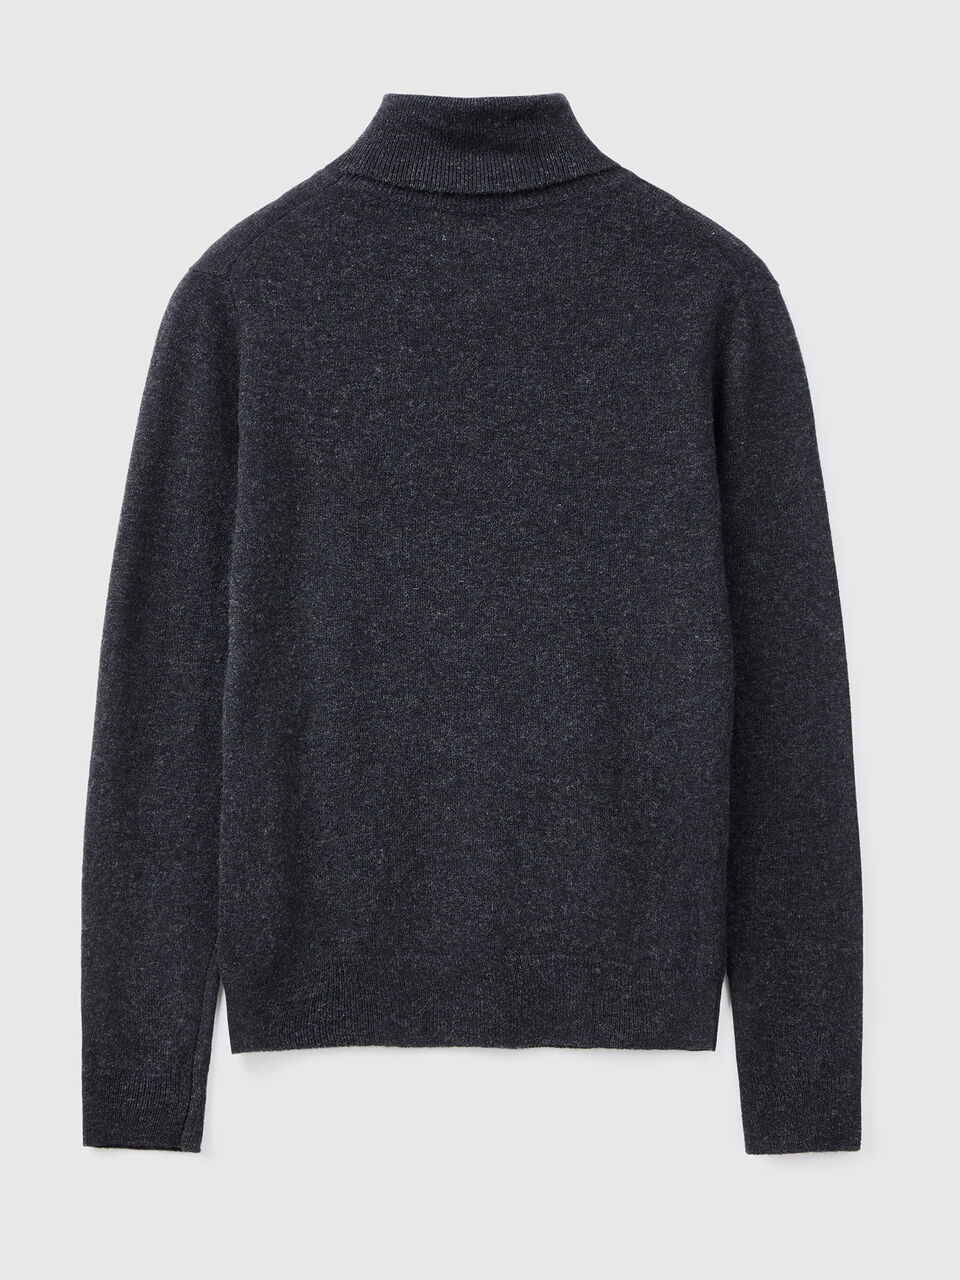 Charcoal gray turtleneck sweater in pure Merino wool - Dark Gray | Benetton